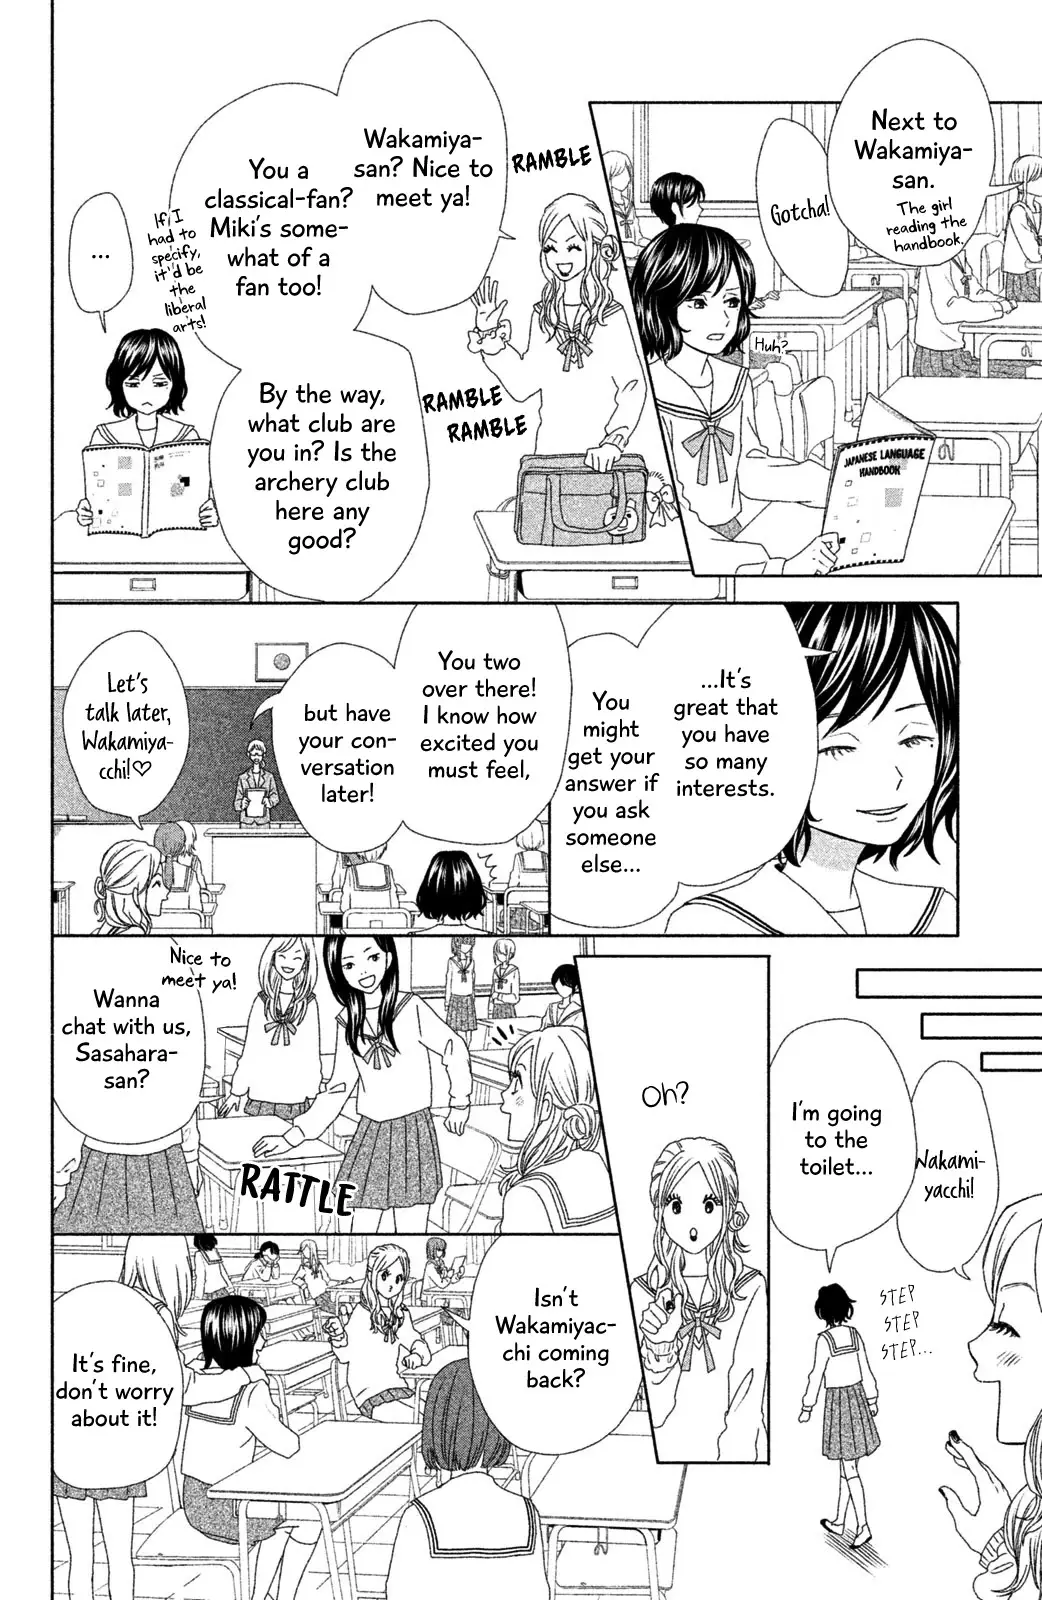 Chihayafuru: Middle School Arc - 11 page 5